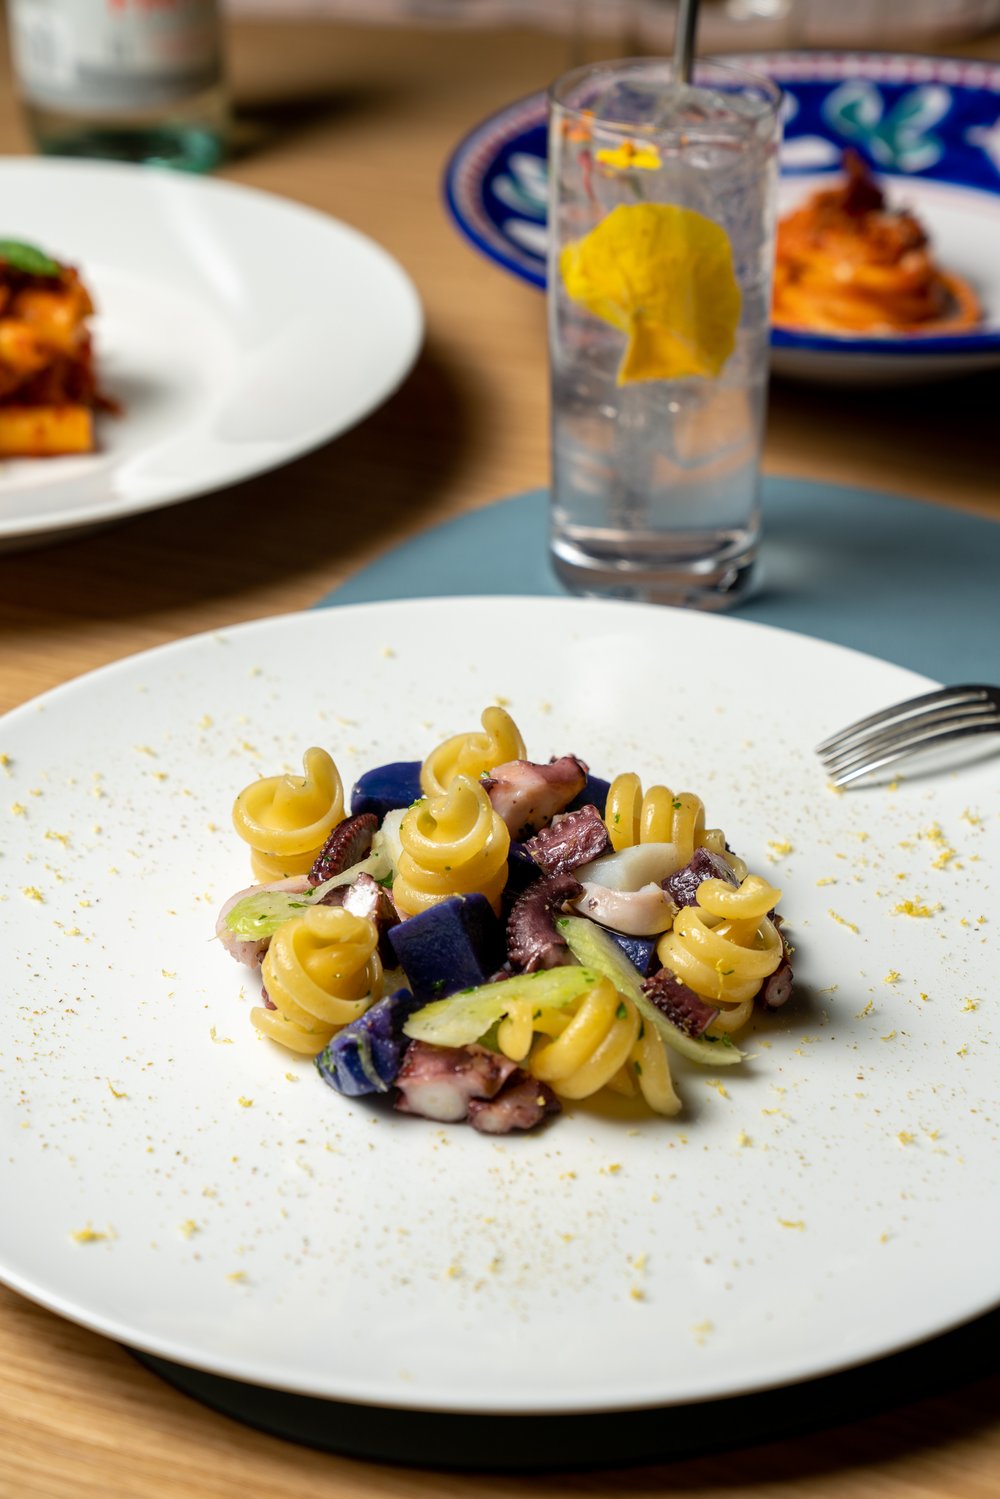 spiral pasta with squid, apple slices, and purple potatos